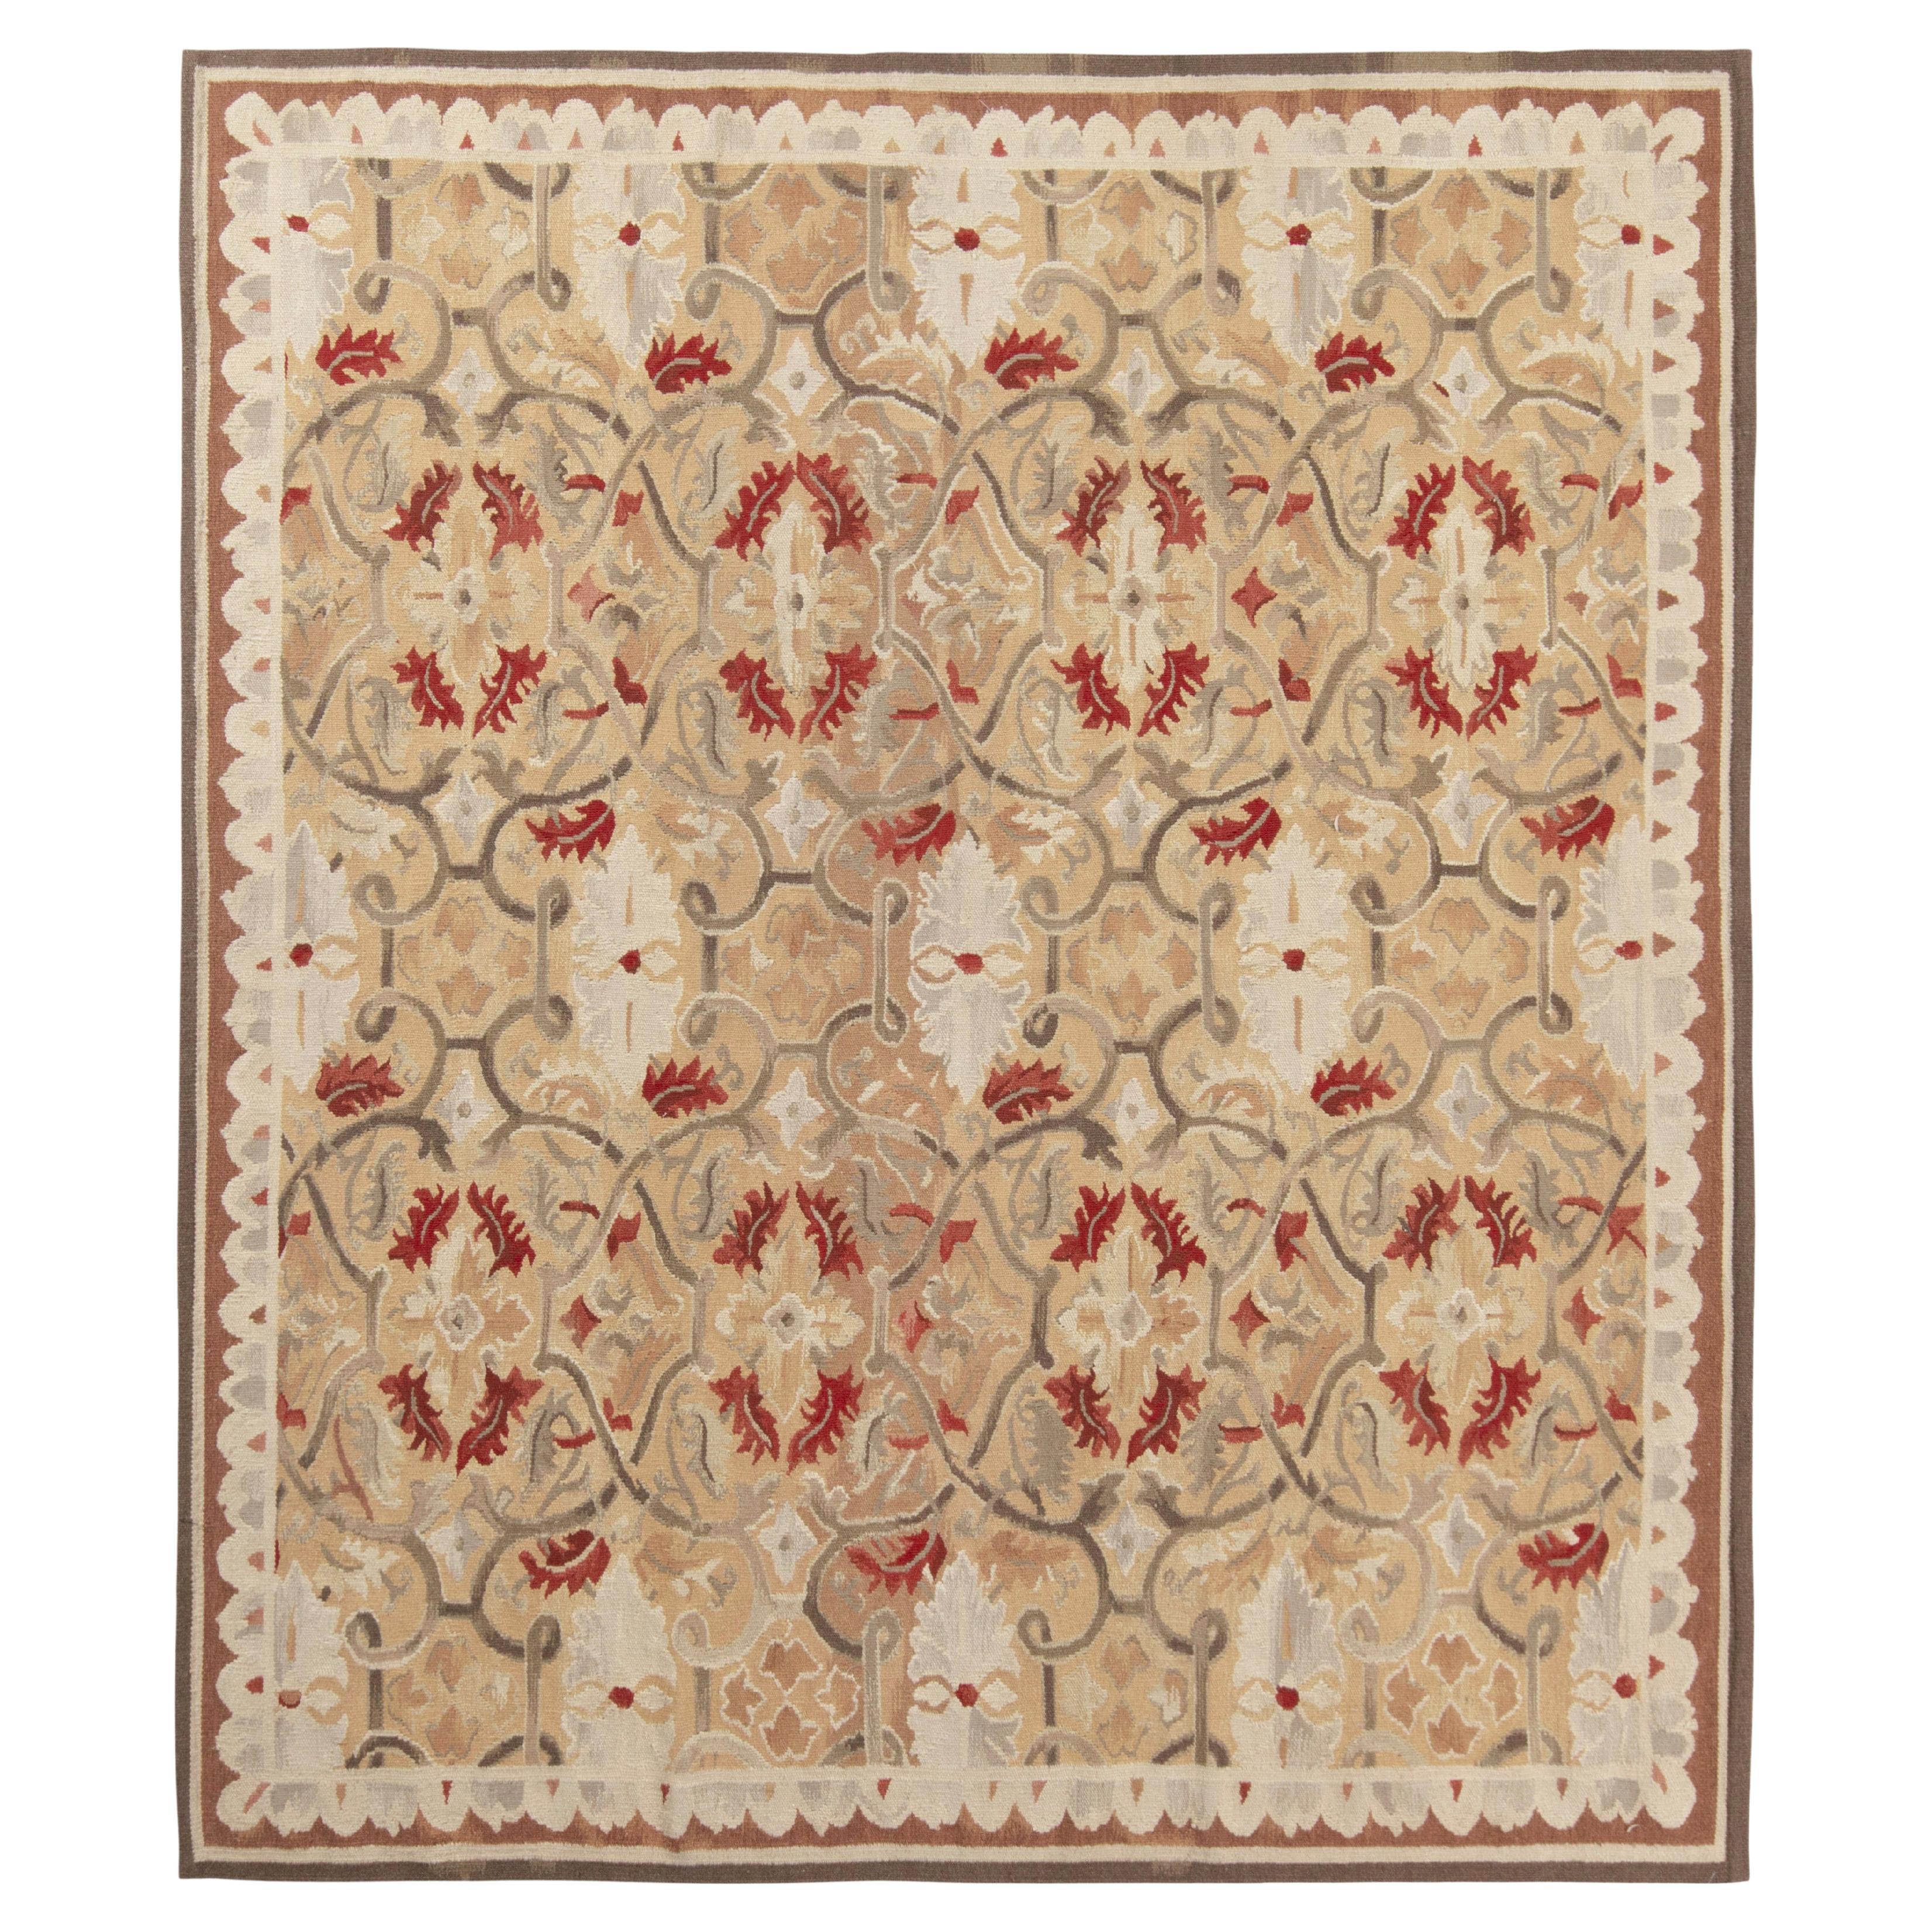 Rug & Kilim's Aubusson Flat Weave Style Rug, Beige, Gray and Red Floral Pattern (motif floral beige, gris et rouge) en vente